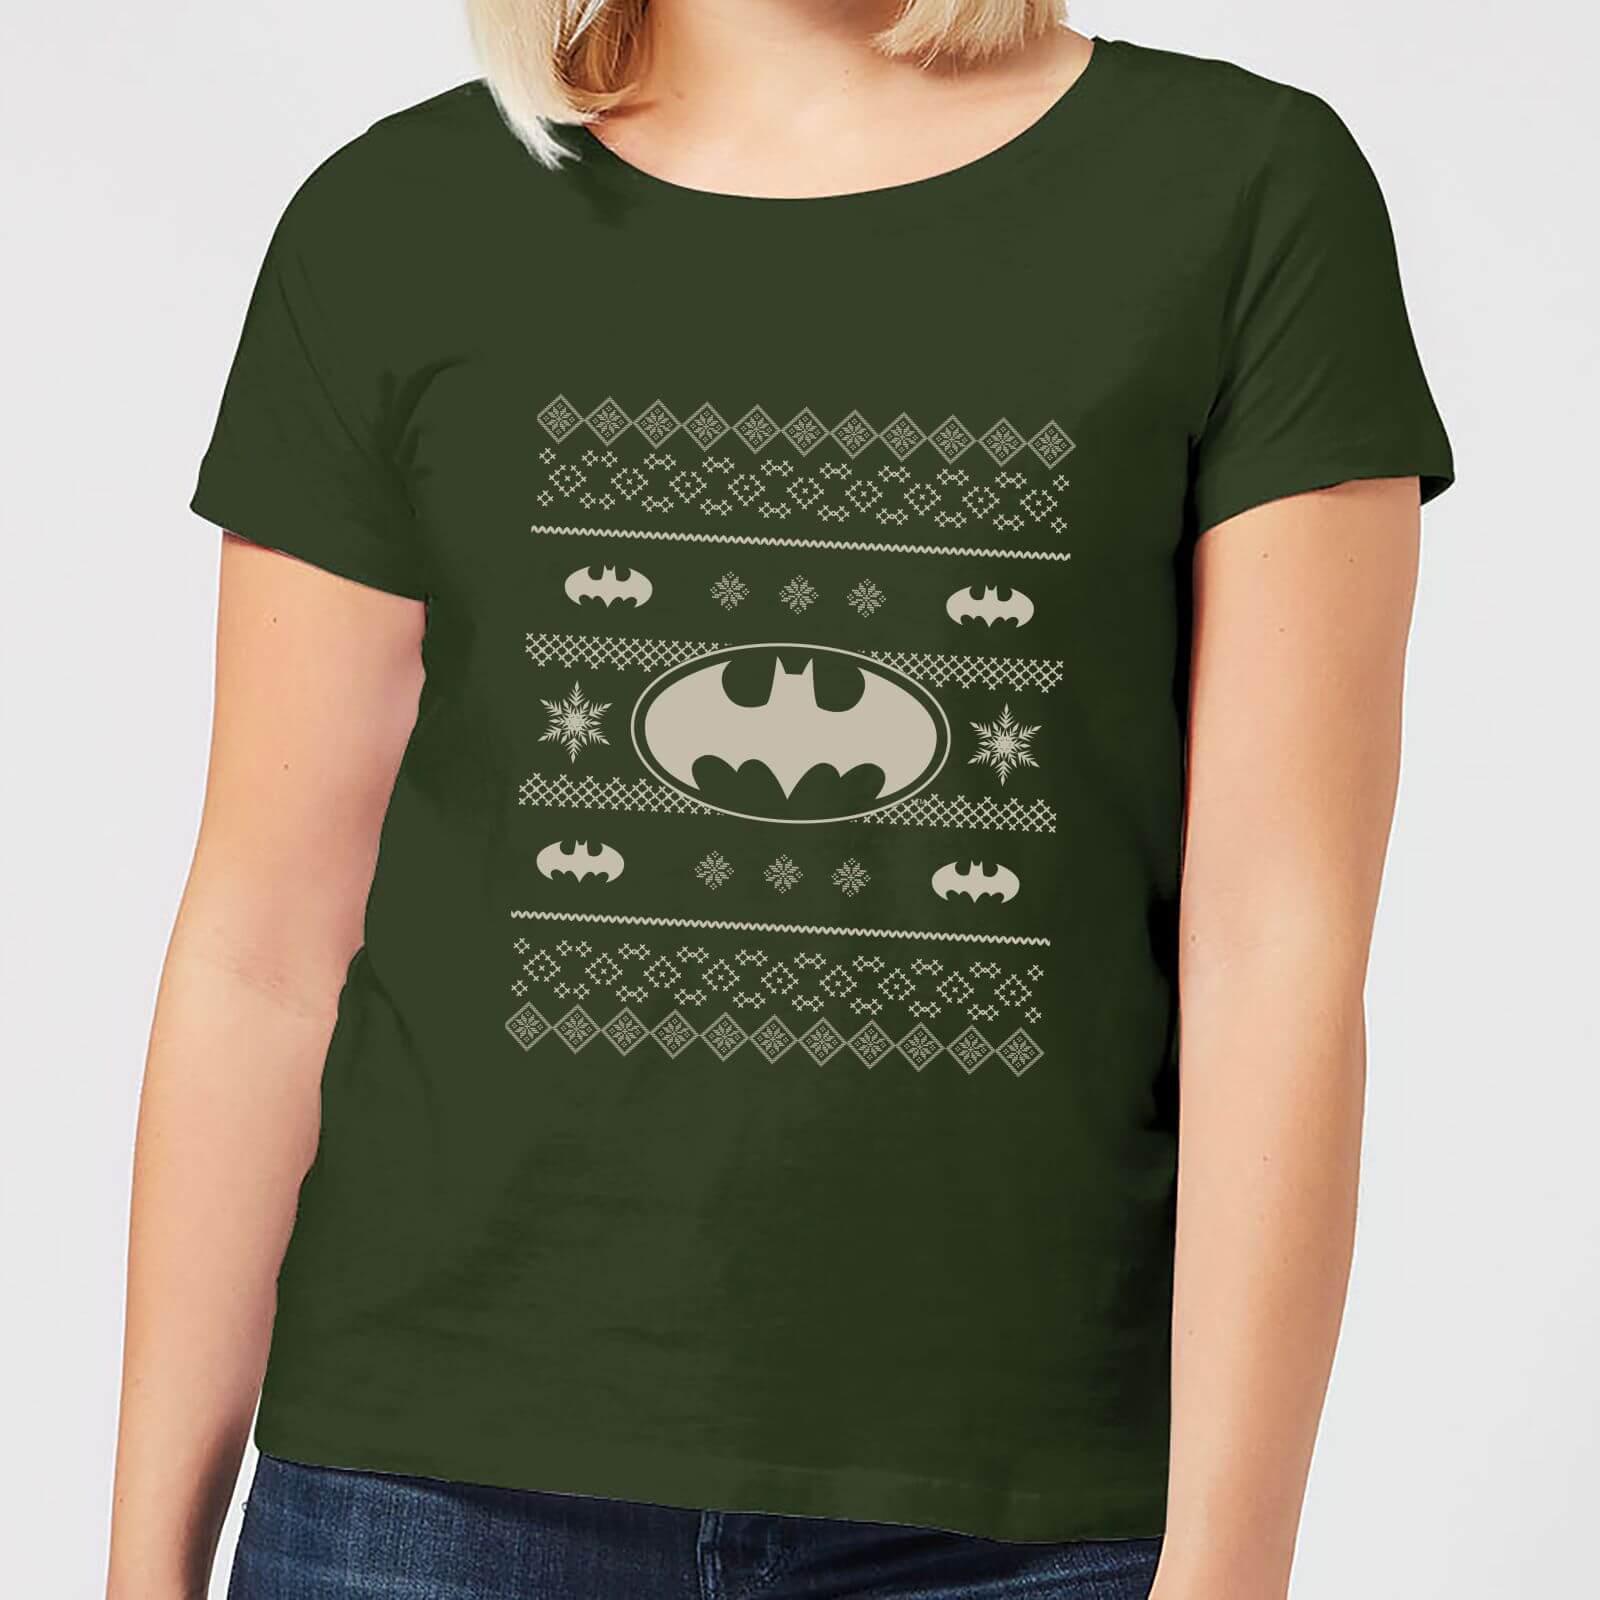 DC Comics Batman Knit Pattern Women's Christmas T-Shirt in Forest Green - S - Forest Green